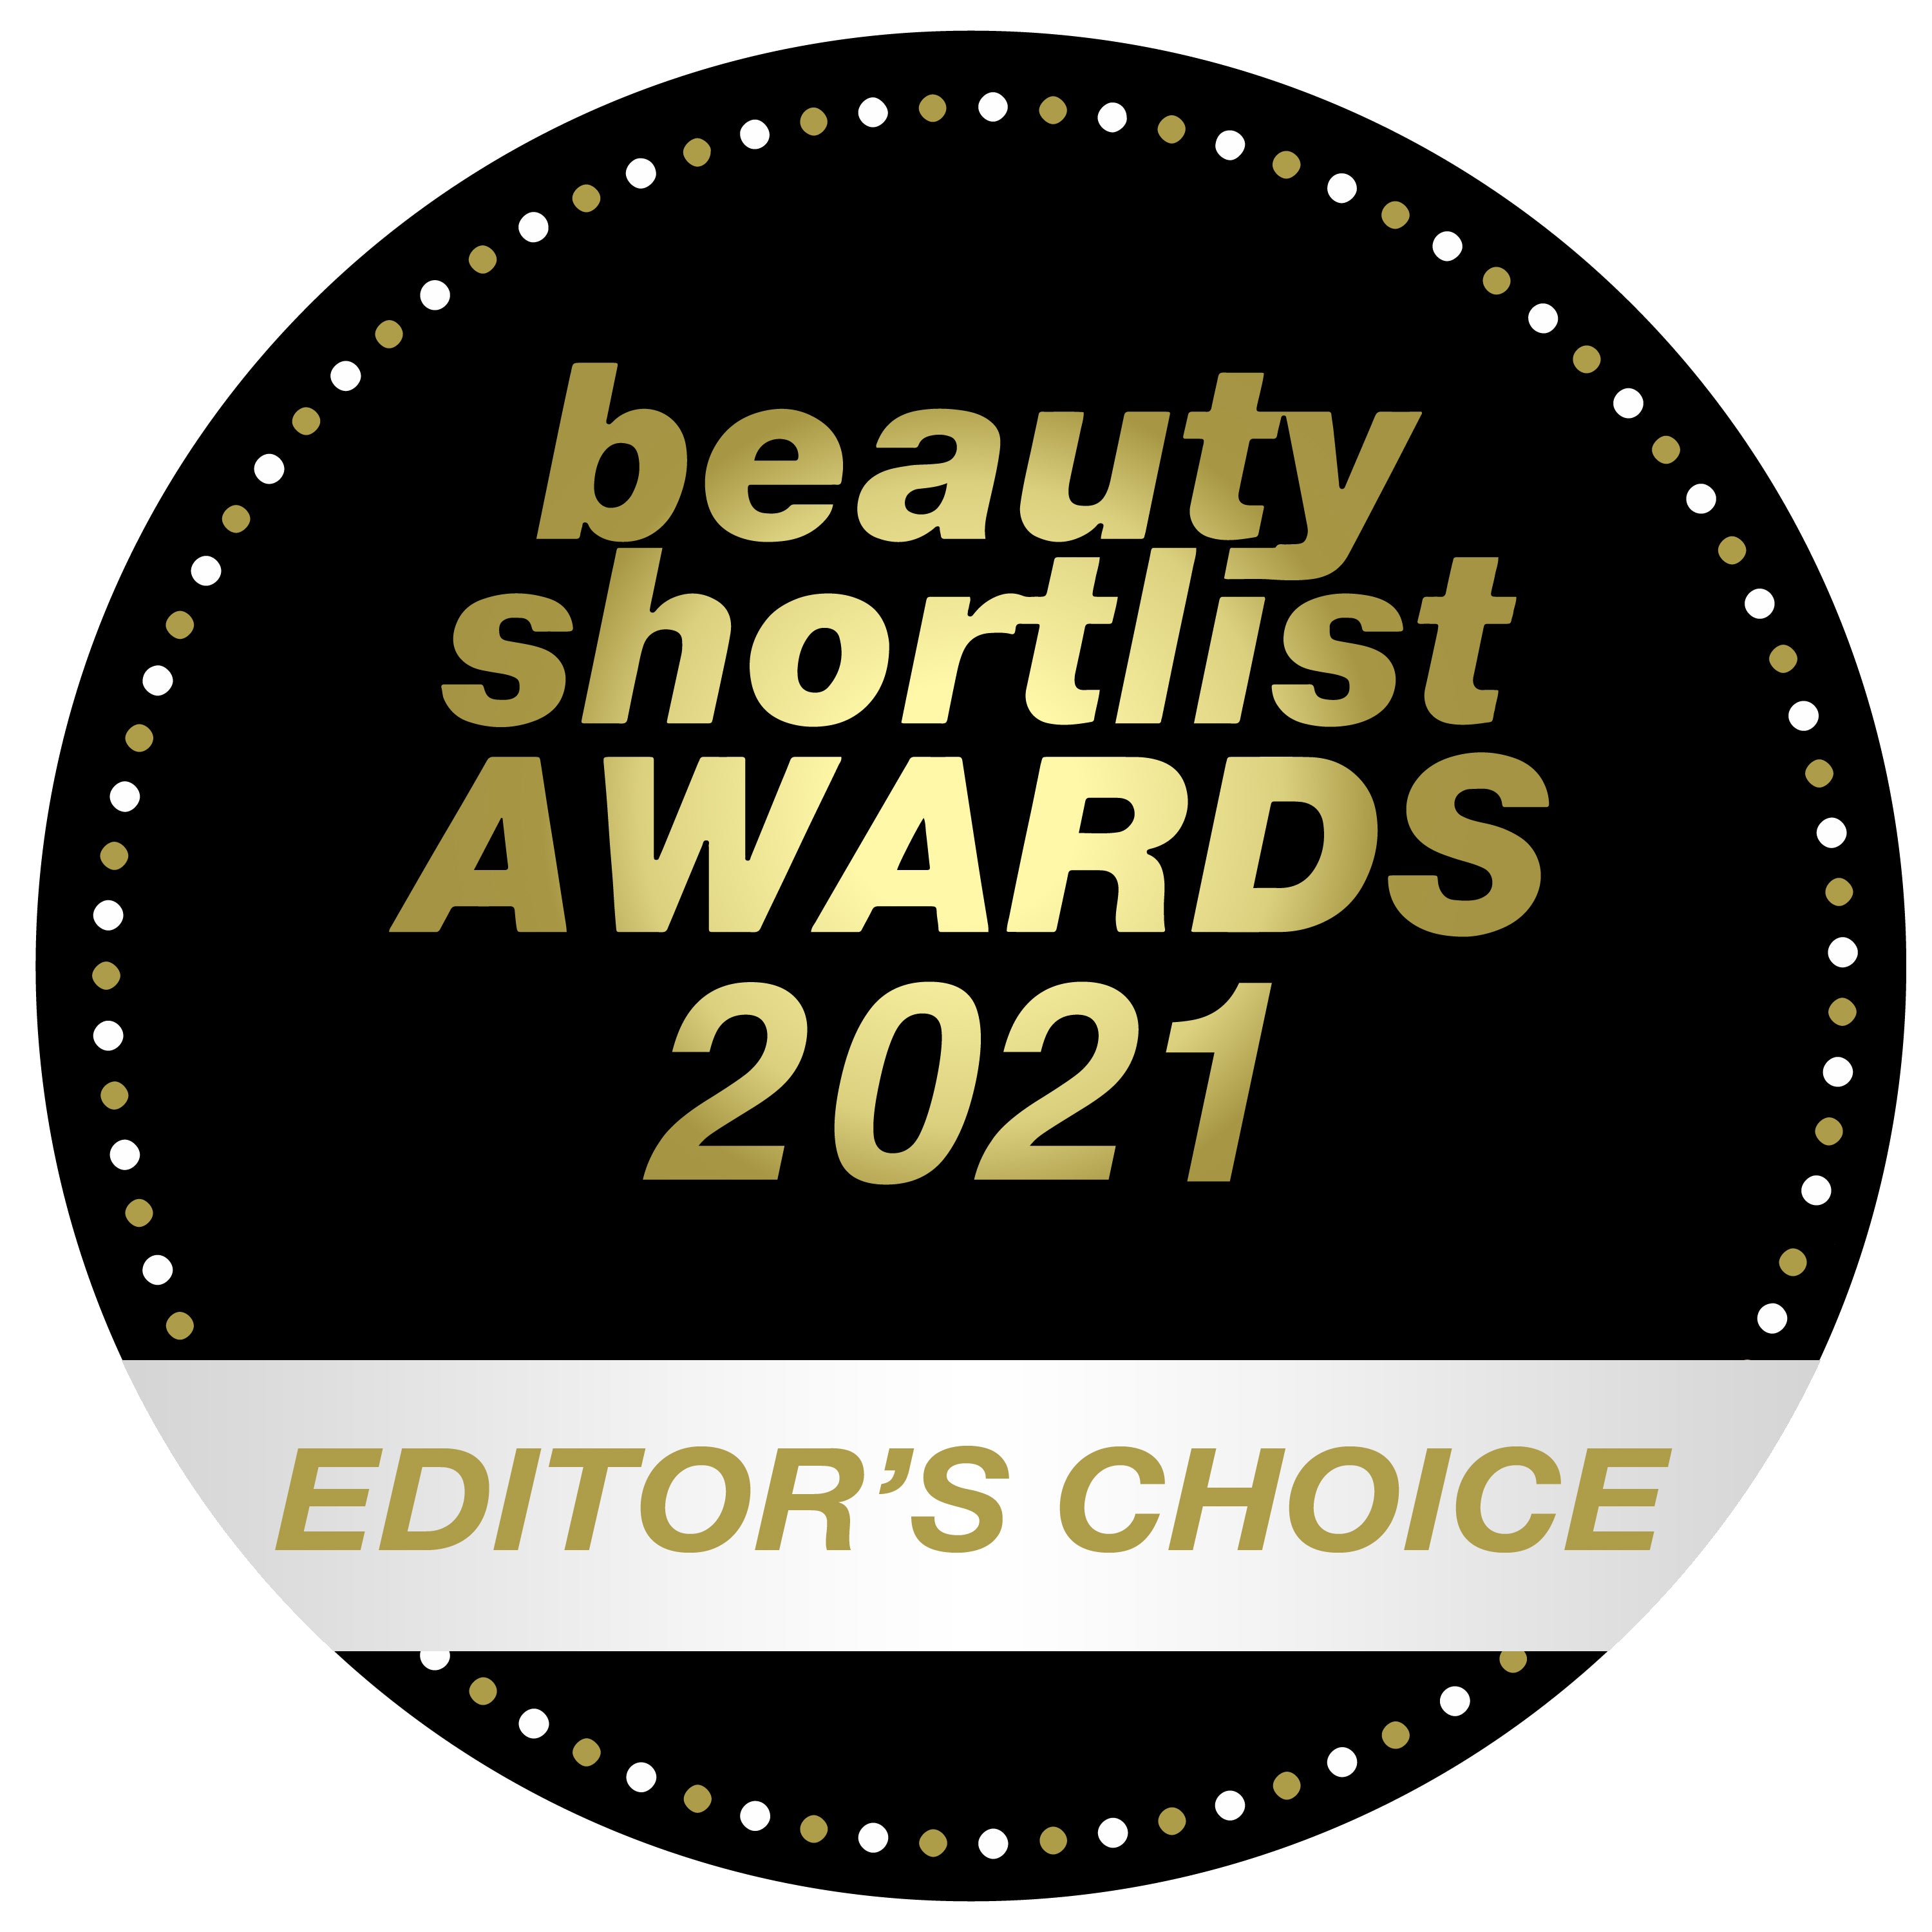 Beauty shortlist awards 2021 editor's choice featuring Bulgarian rose.